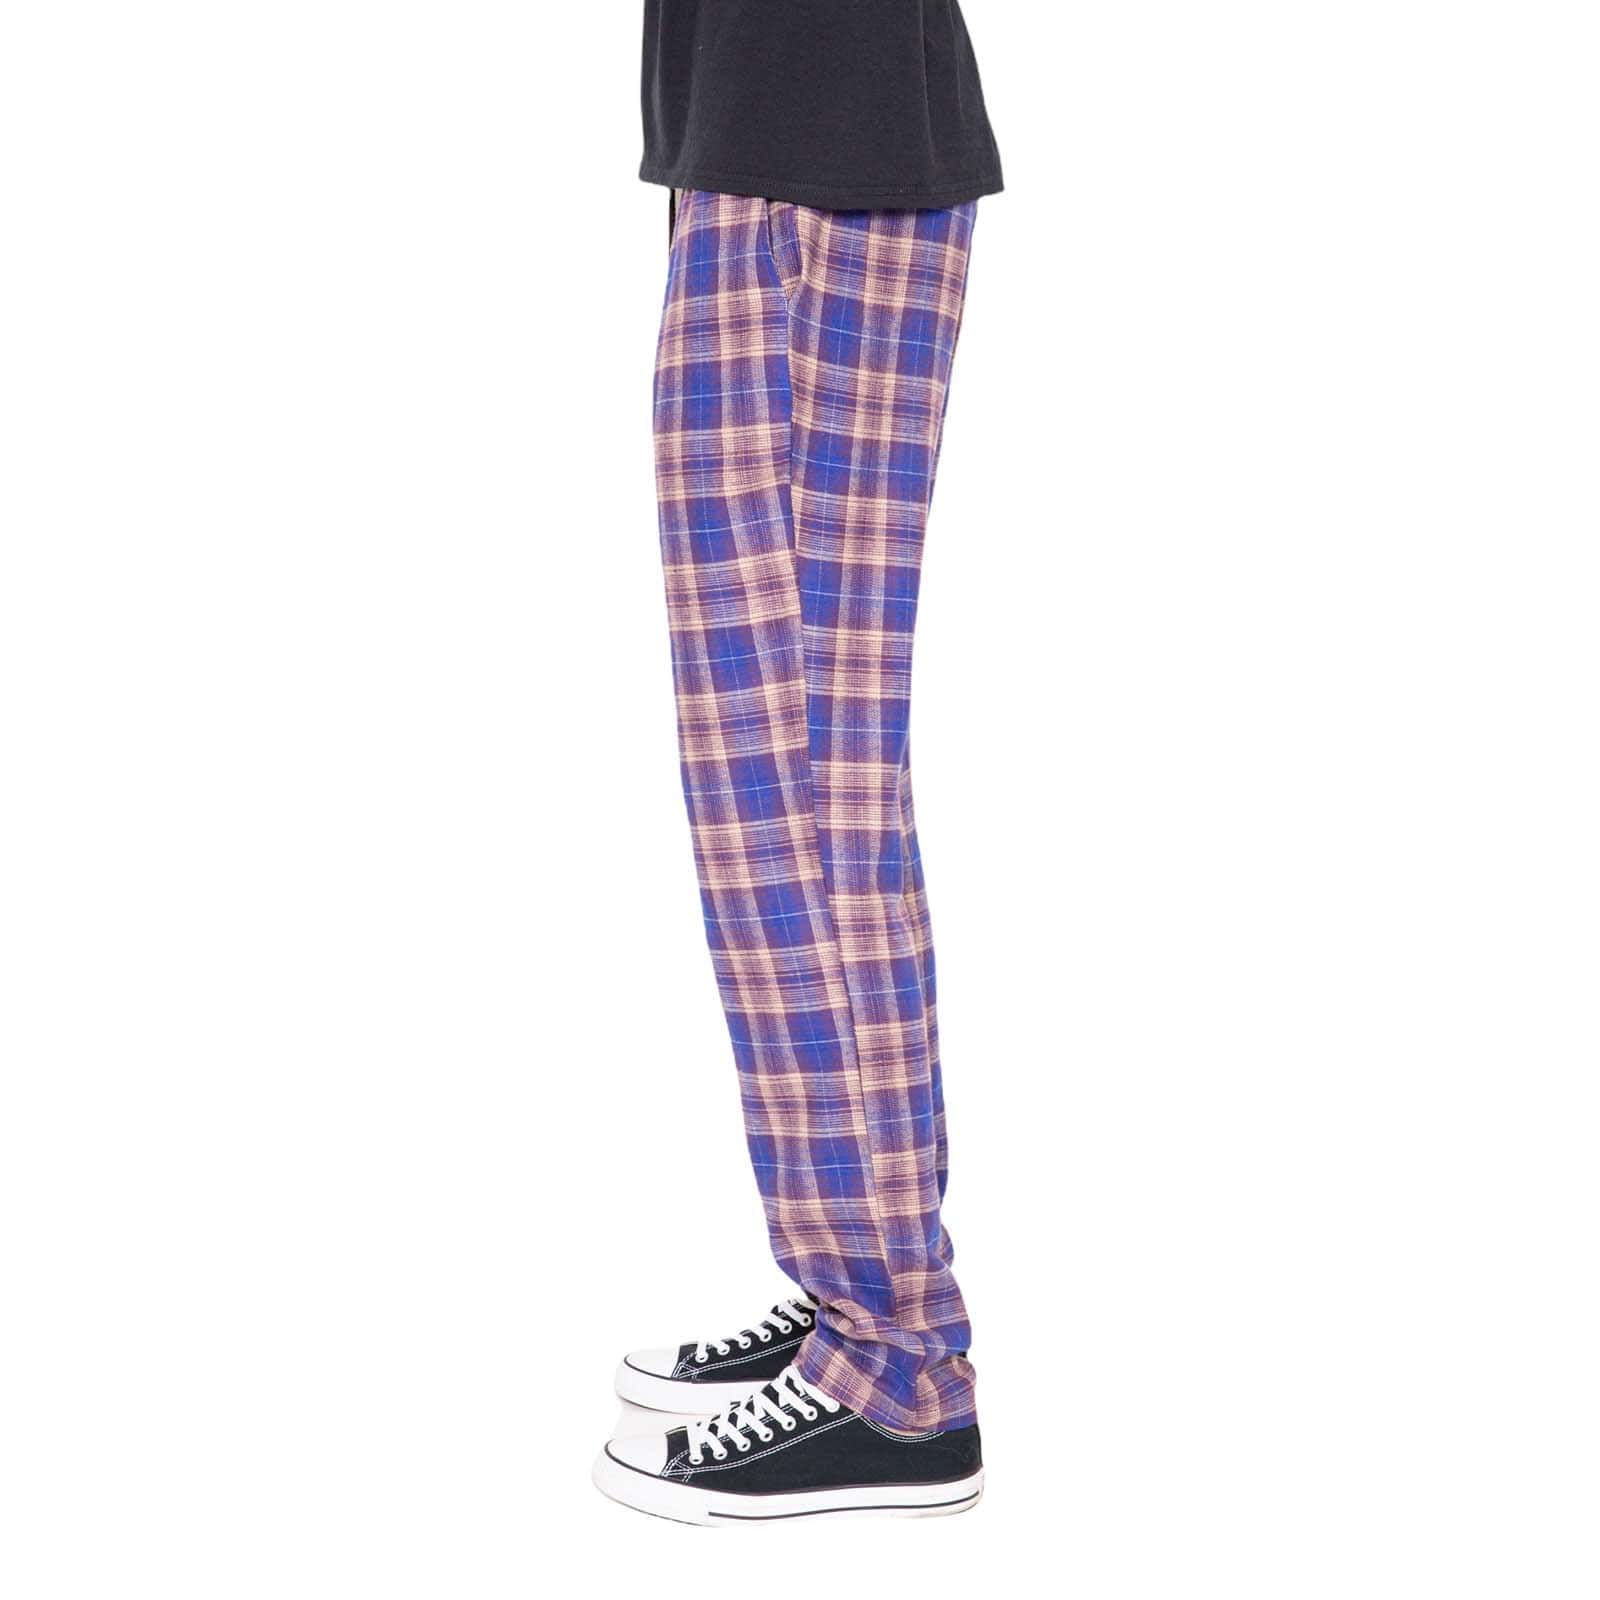 Skidz Pants Stash Pant - Baymen Purple Flannel